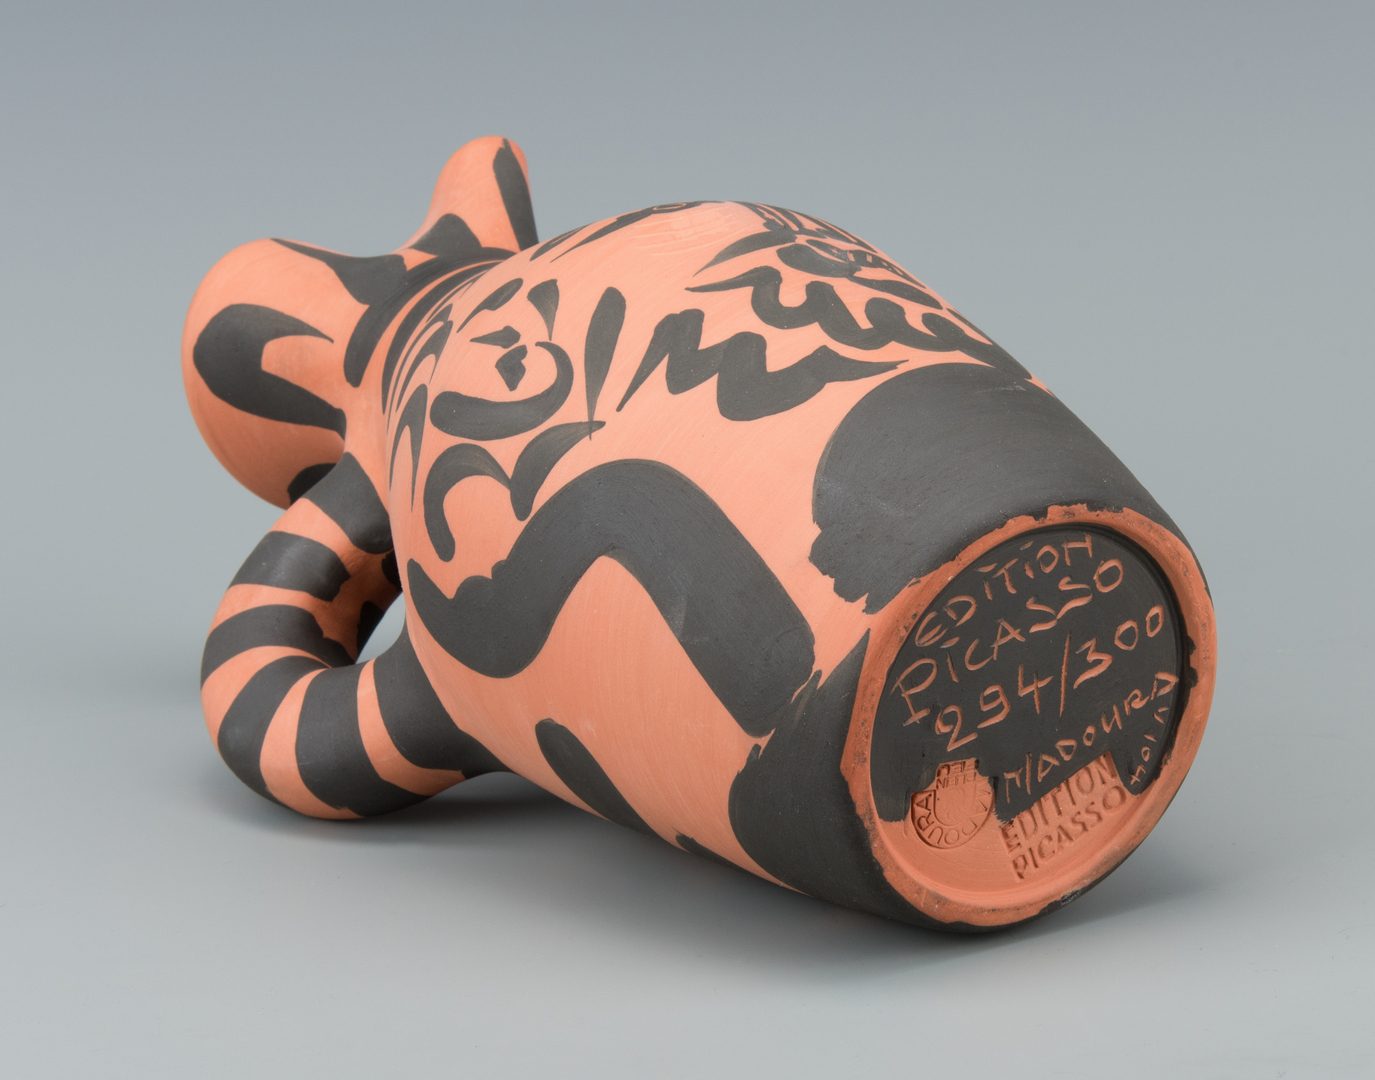 Lot 405: Picasso Ceramic Vessel "Yan Barbu"